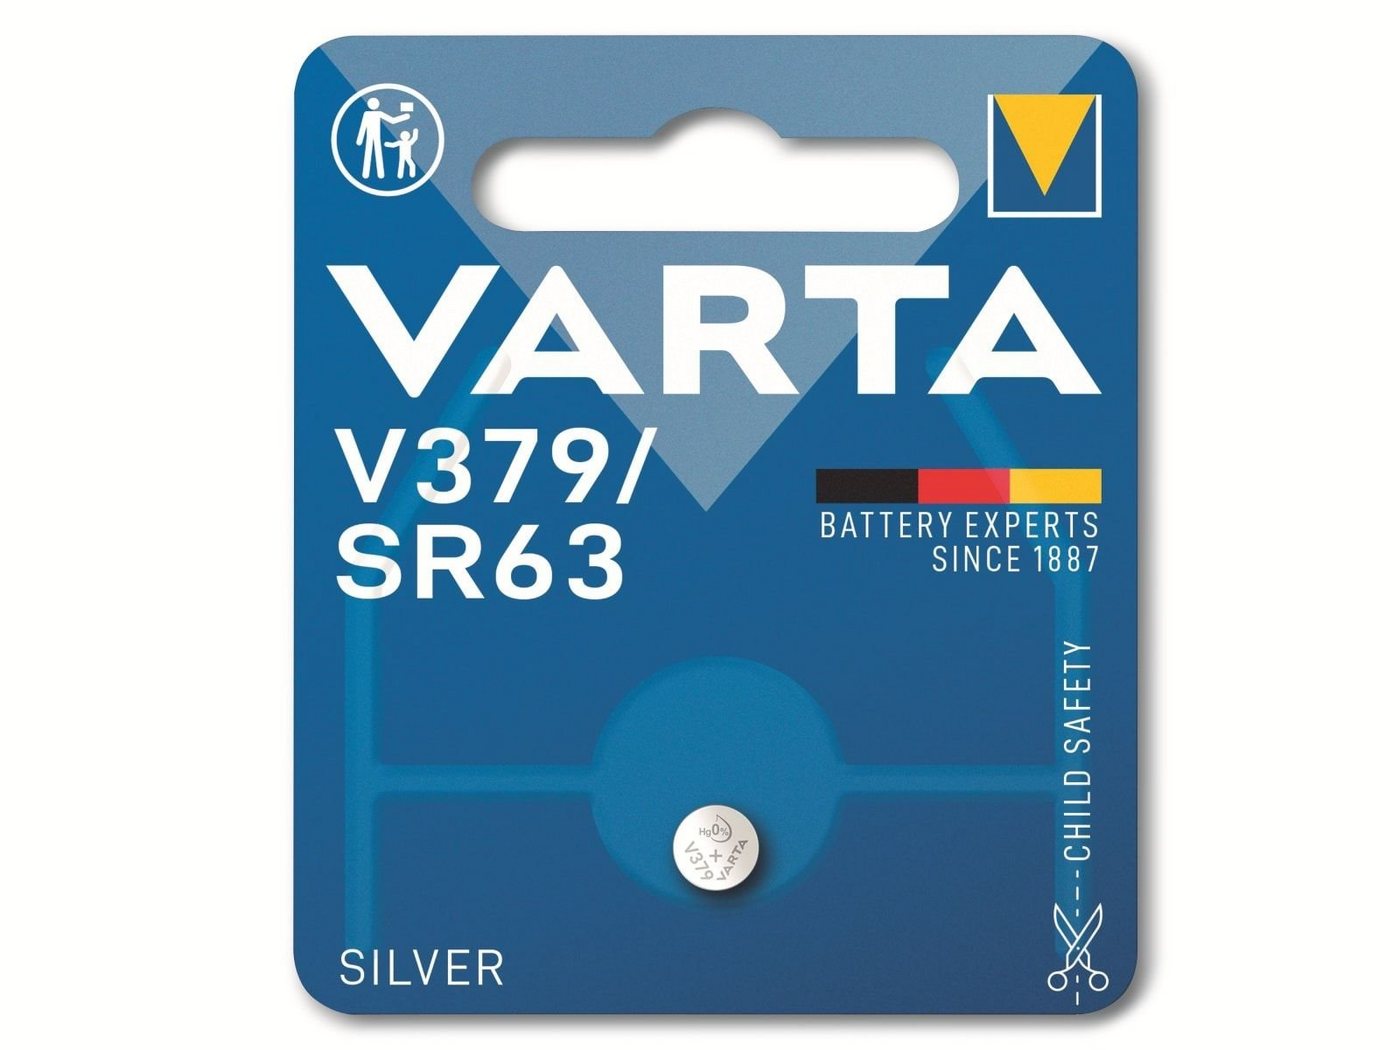 VARTA VARTA Knopfzelle Silver Oxide, 379 SR63, 1.55V, 1 Knopfzelle von VARTA